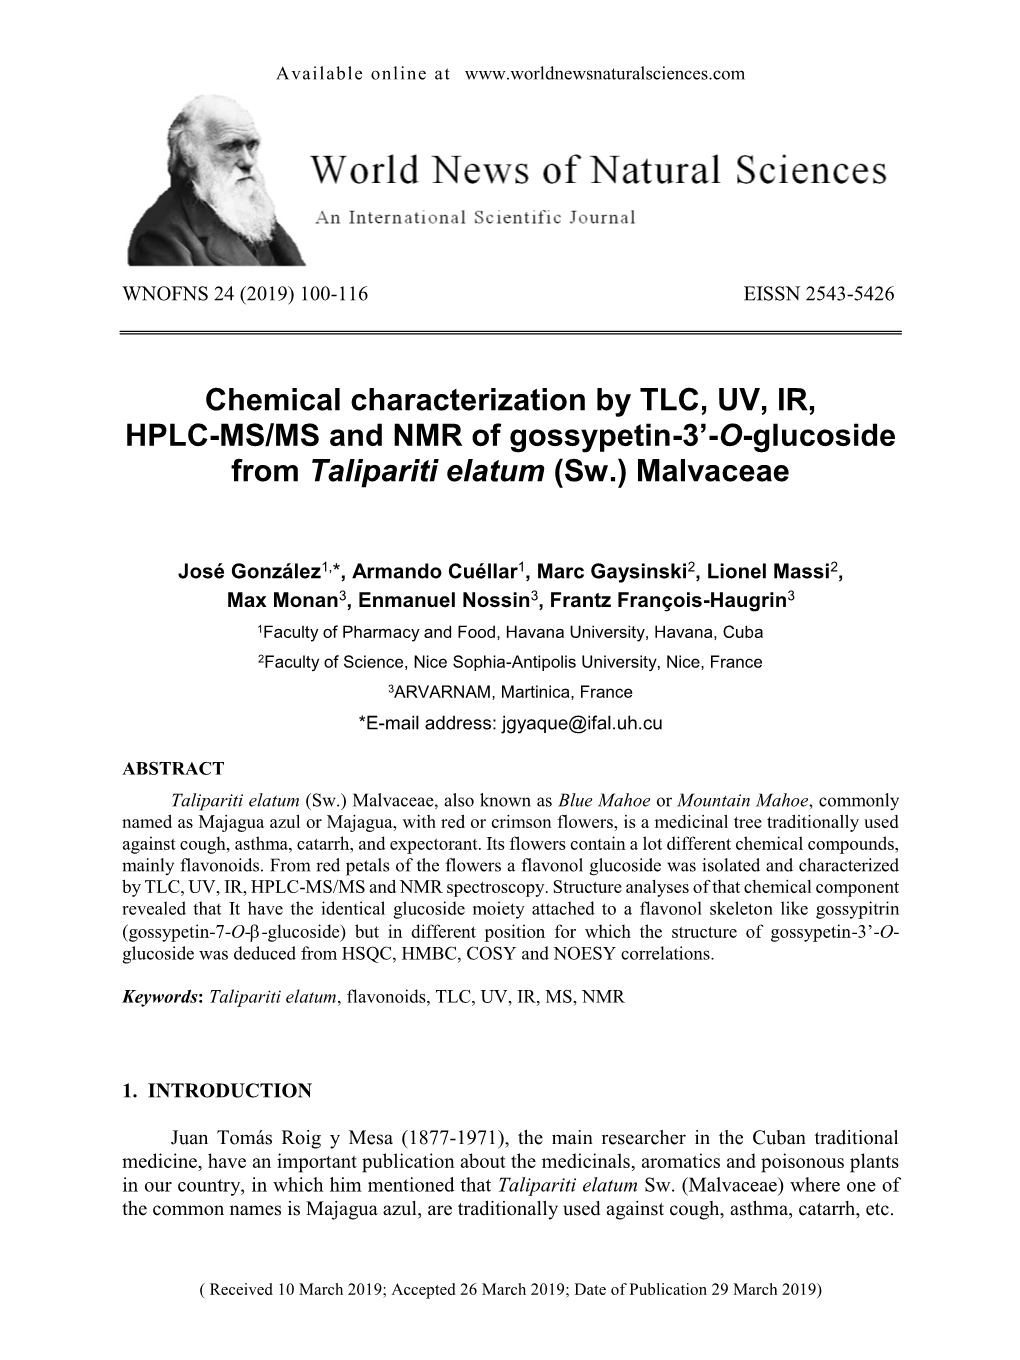 Chemical Characterization by TLC, UV, IR, HPLC-MS/MS and NMR of Gossypetin-3’-O-Glucoside from Talipariti Elatum (Sw.) Malvaceae